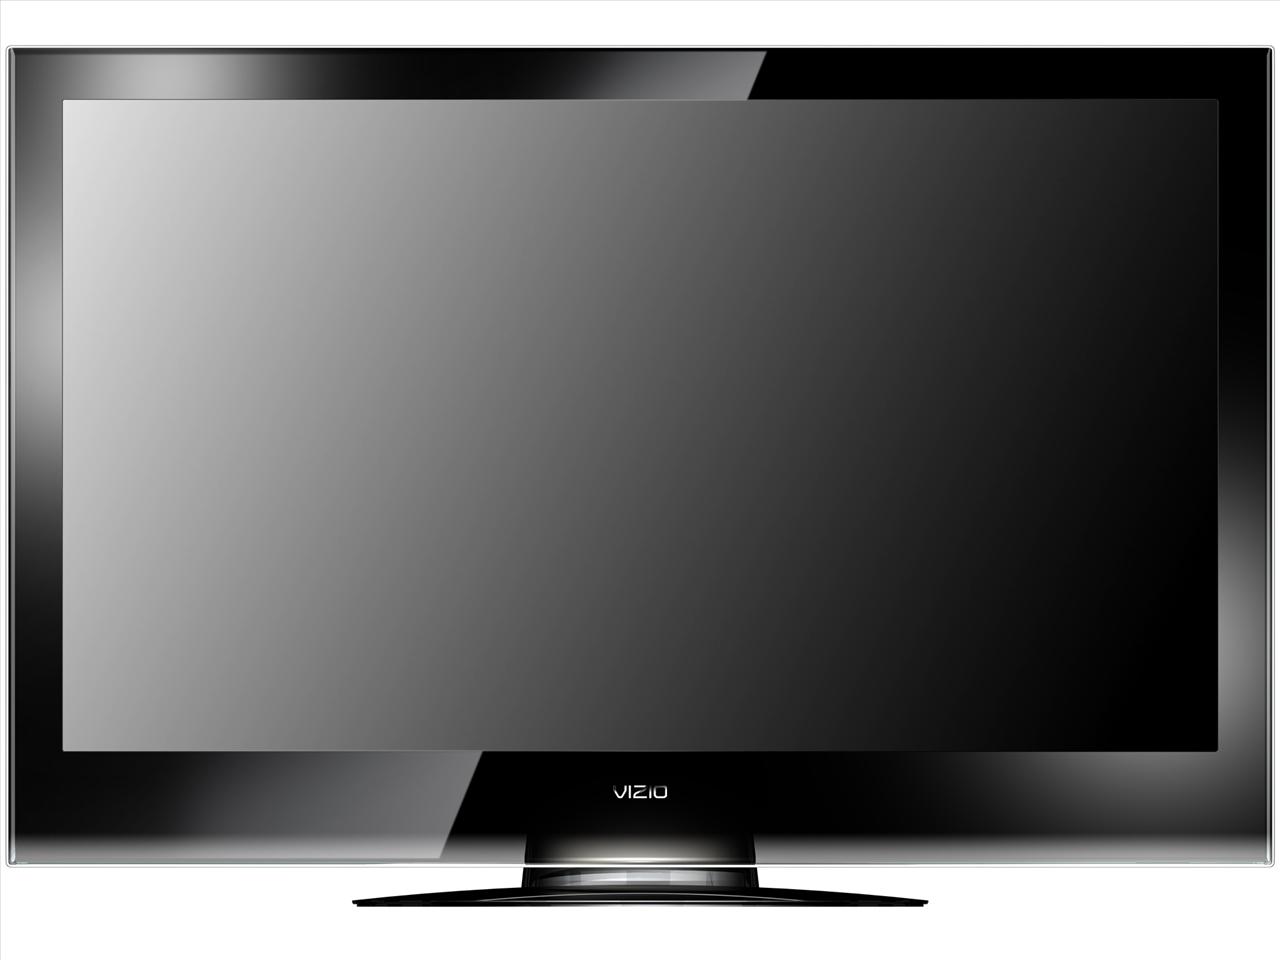 Телевизор самсунг 2010. ЖК телевизор сони 42 2010 модель. Телевизор LG Plazma 2010 года. Телевизор Панасоник 2010 года. Телевизор LG 72 дюйма.